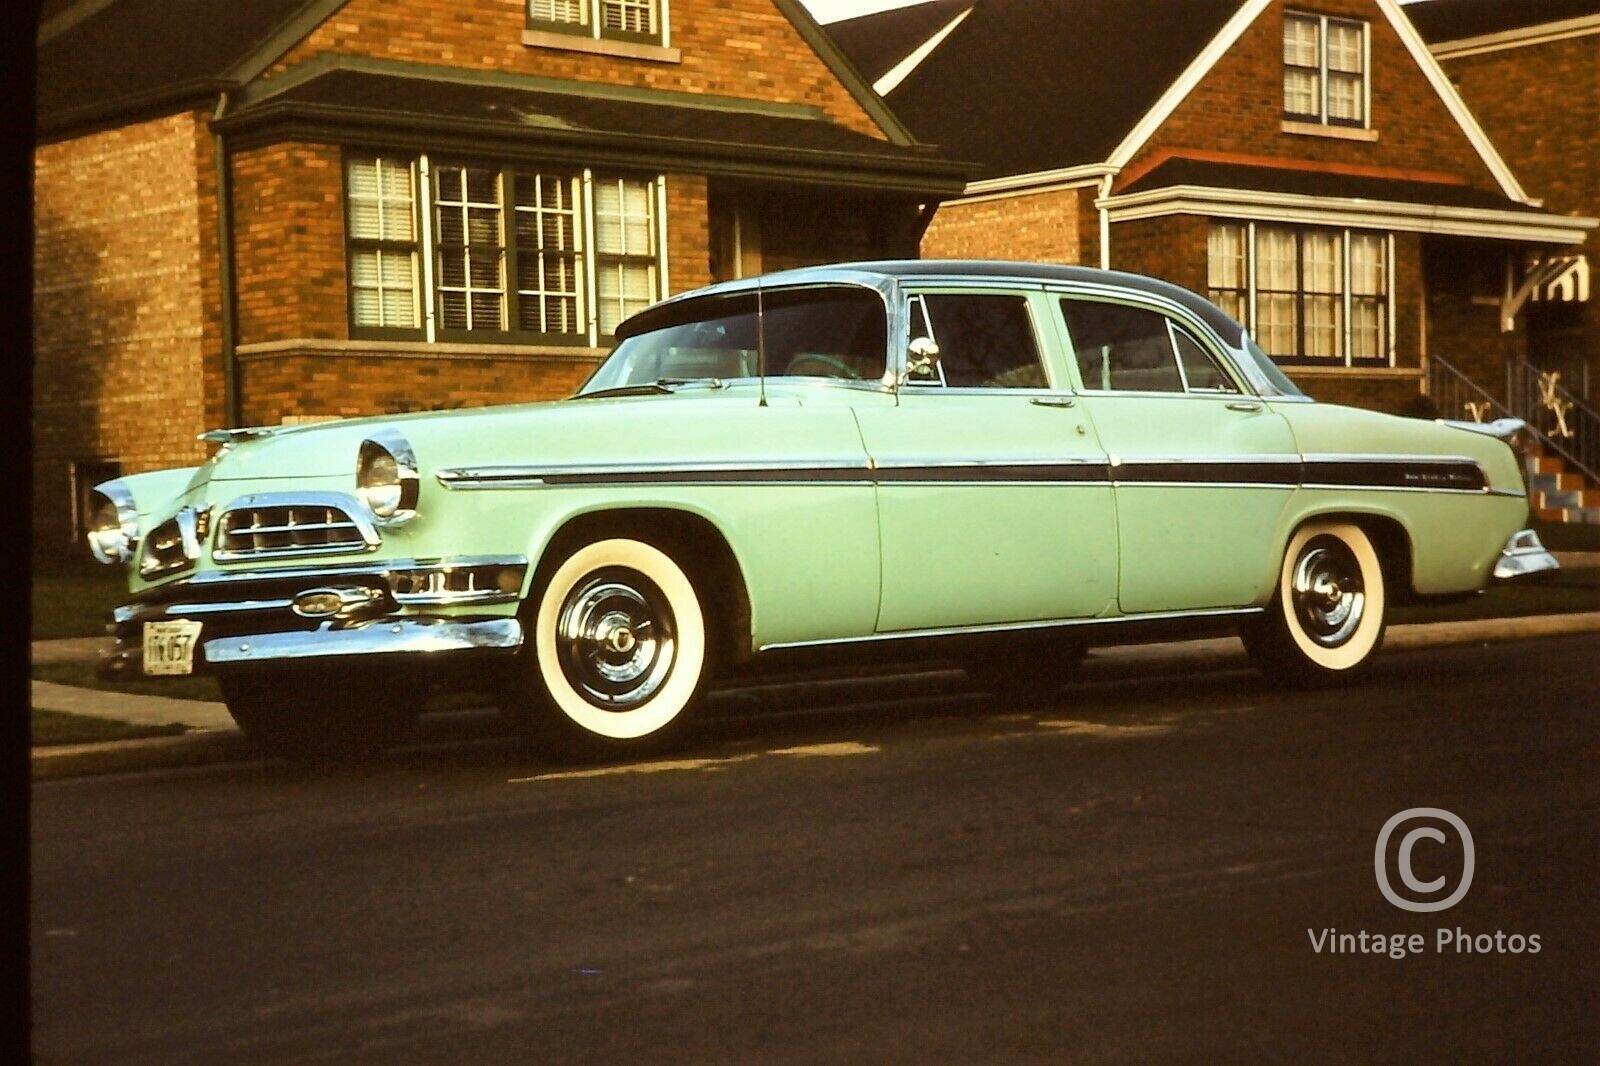 1950s Classic American Car - Green